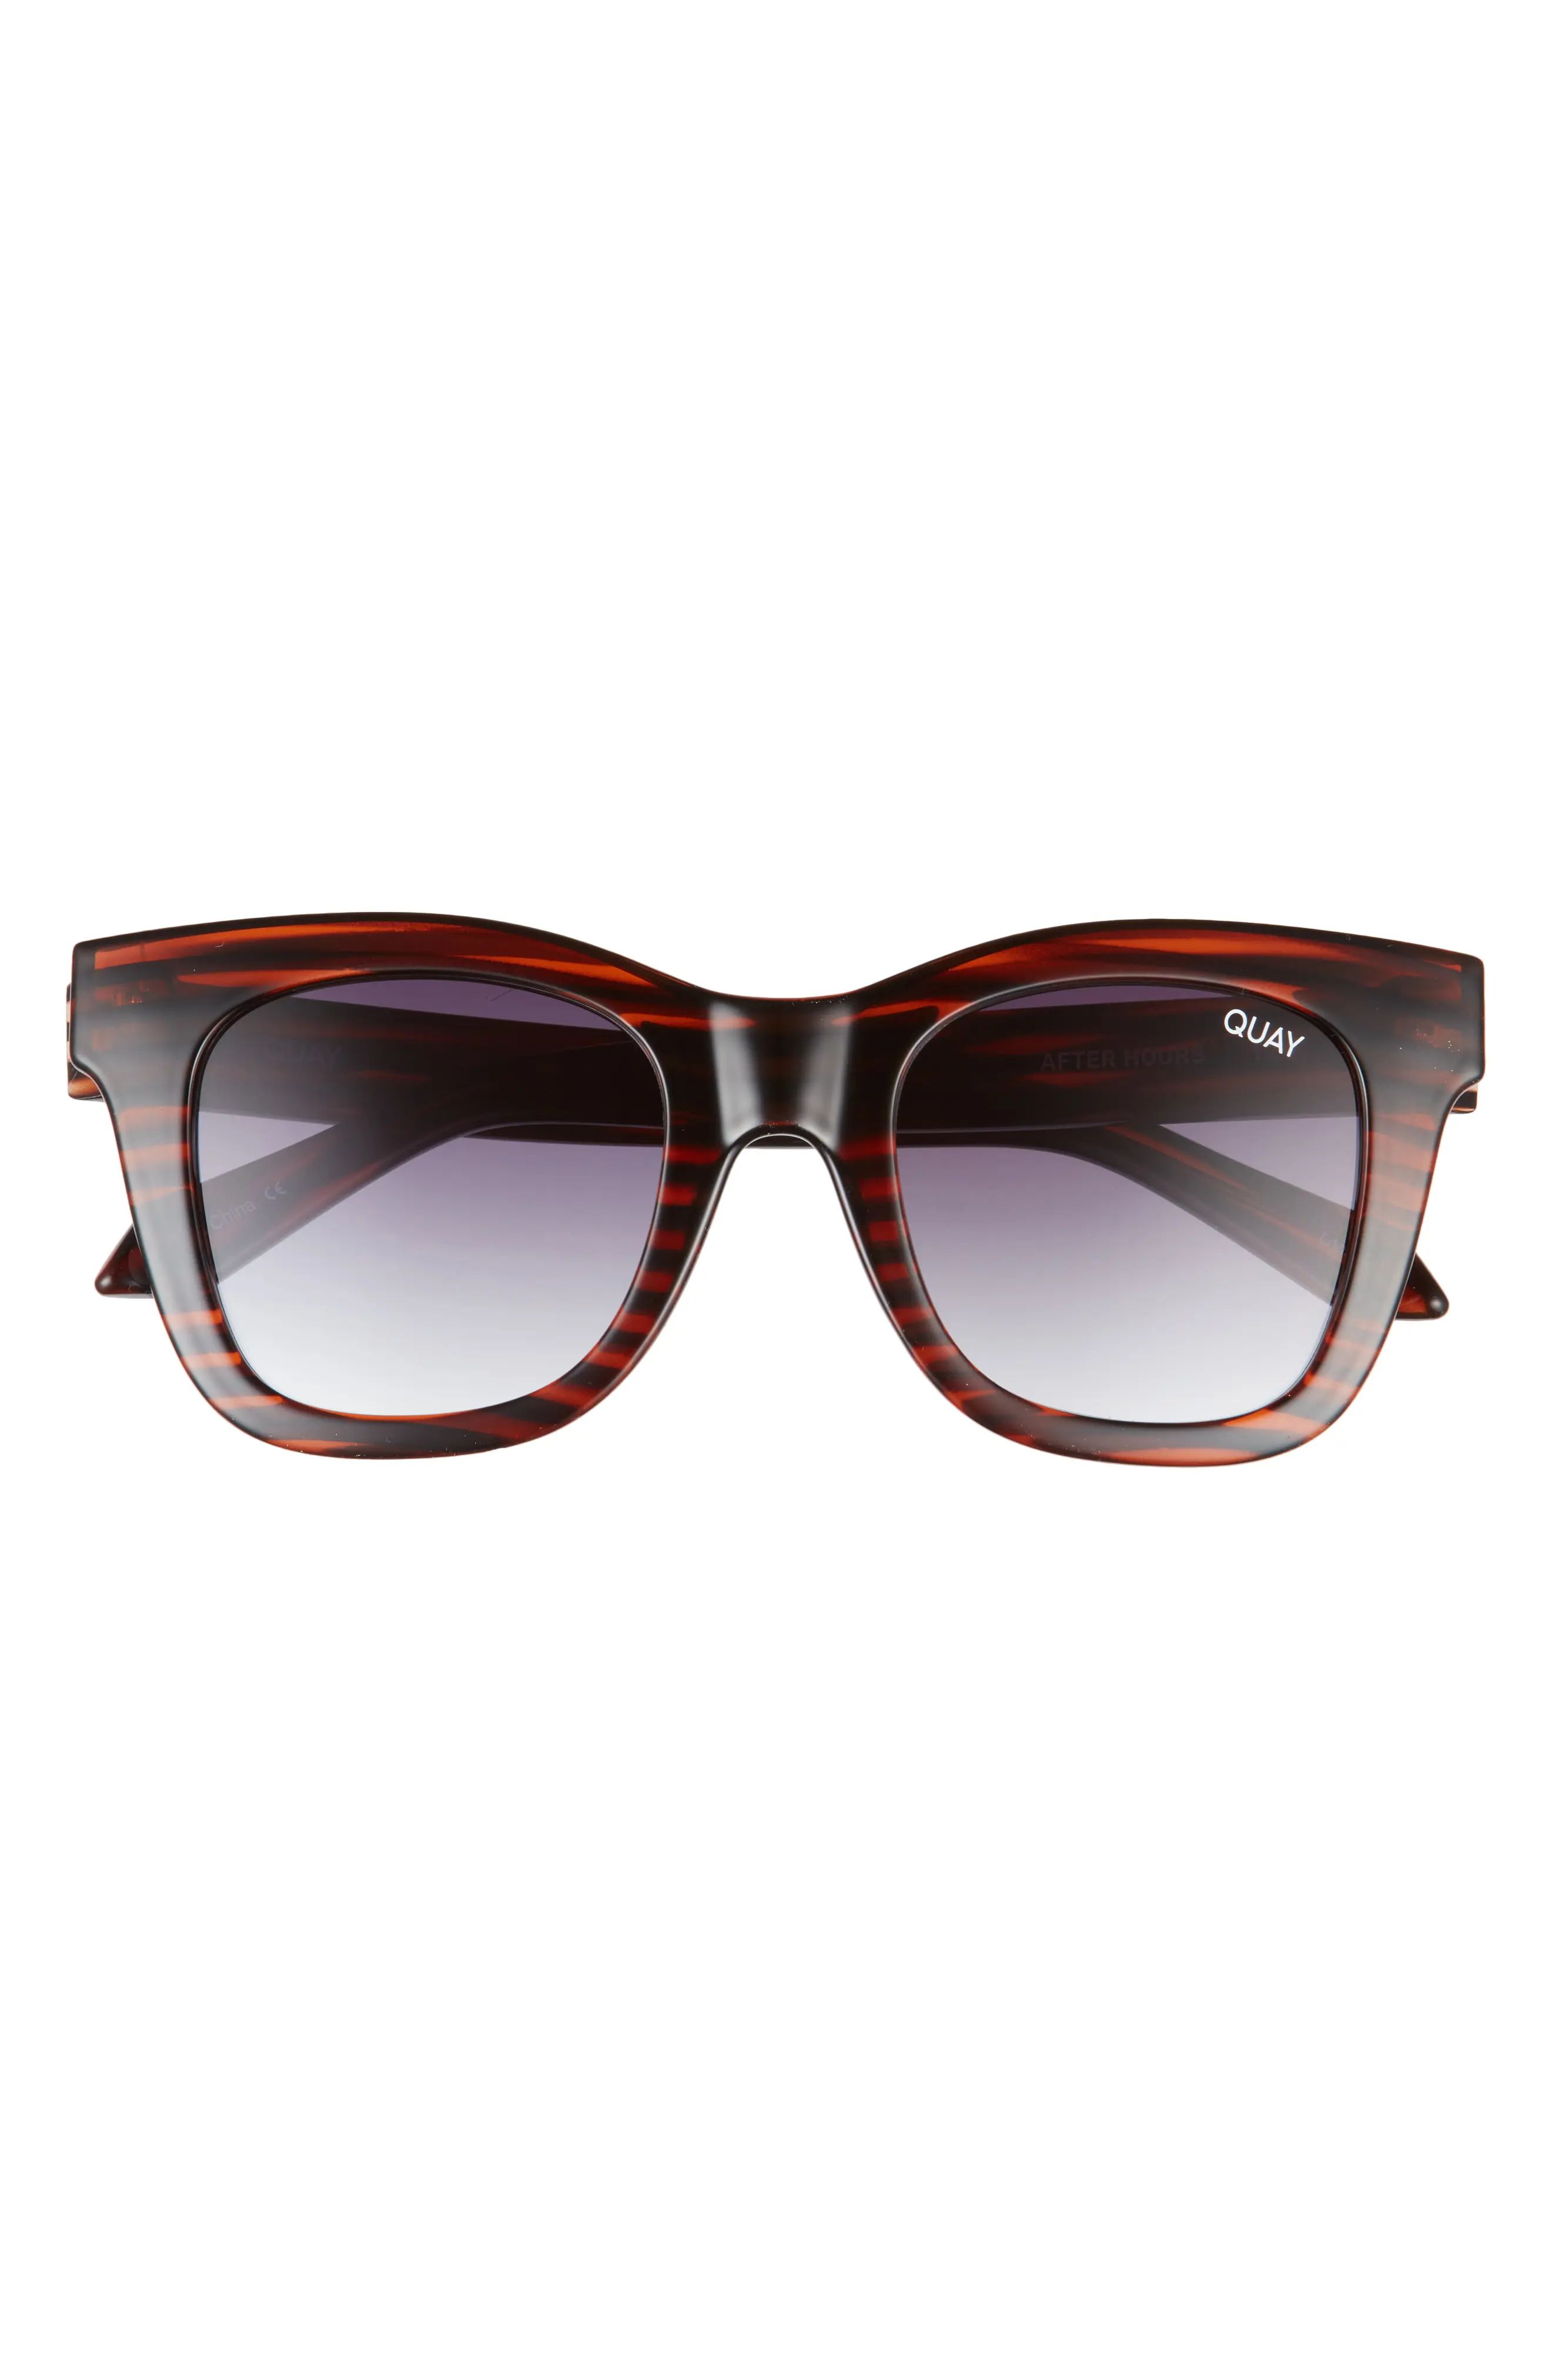 Quay Australia After Hours 50mm Polarized Square Sunglasses in Espresso Stripe/Smk Gradient at Nords | Nordstrom